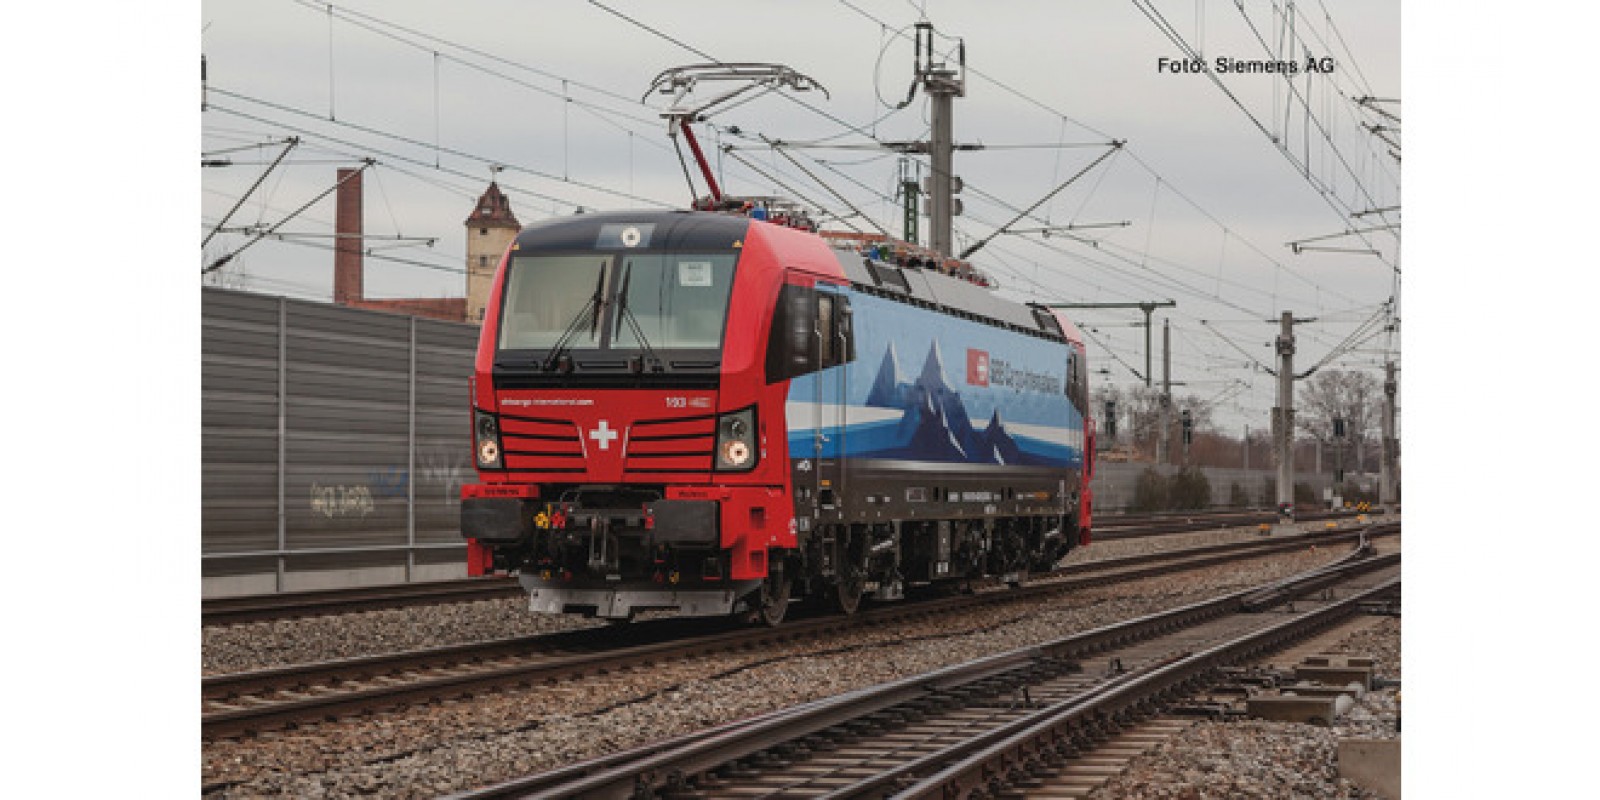 RO73955 - Electric locomotive 193 478, SBB